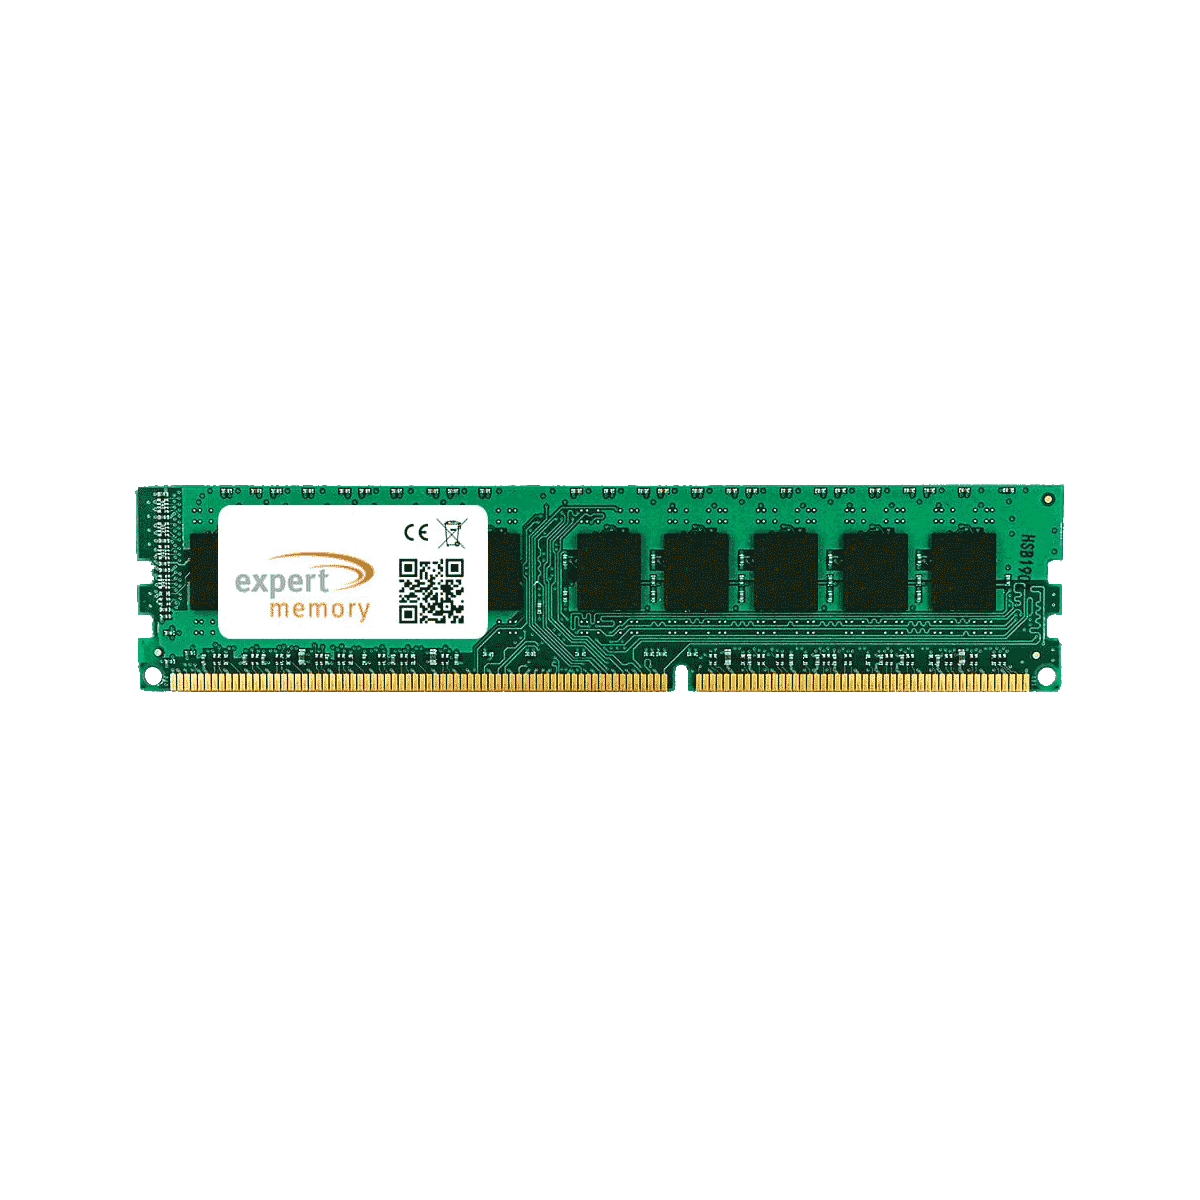 1333 Memory III 2Rx8 Edition 2GB RAM Upgrade 2 UDIMM Mainboard Workstation/Desktop Asus MEMORY Black EXPERT GB DDR3